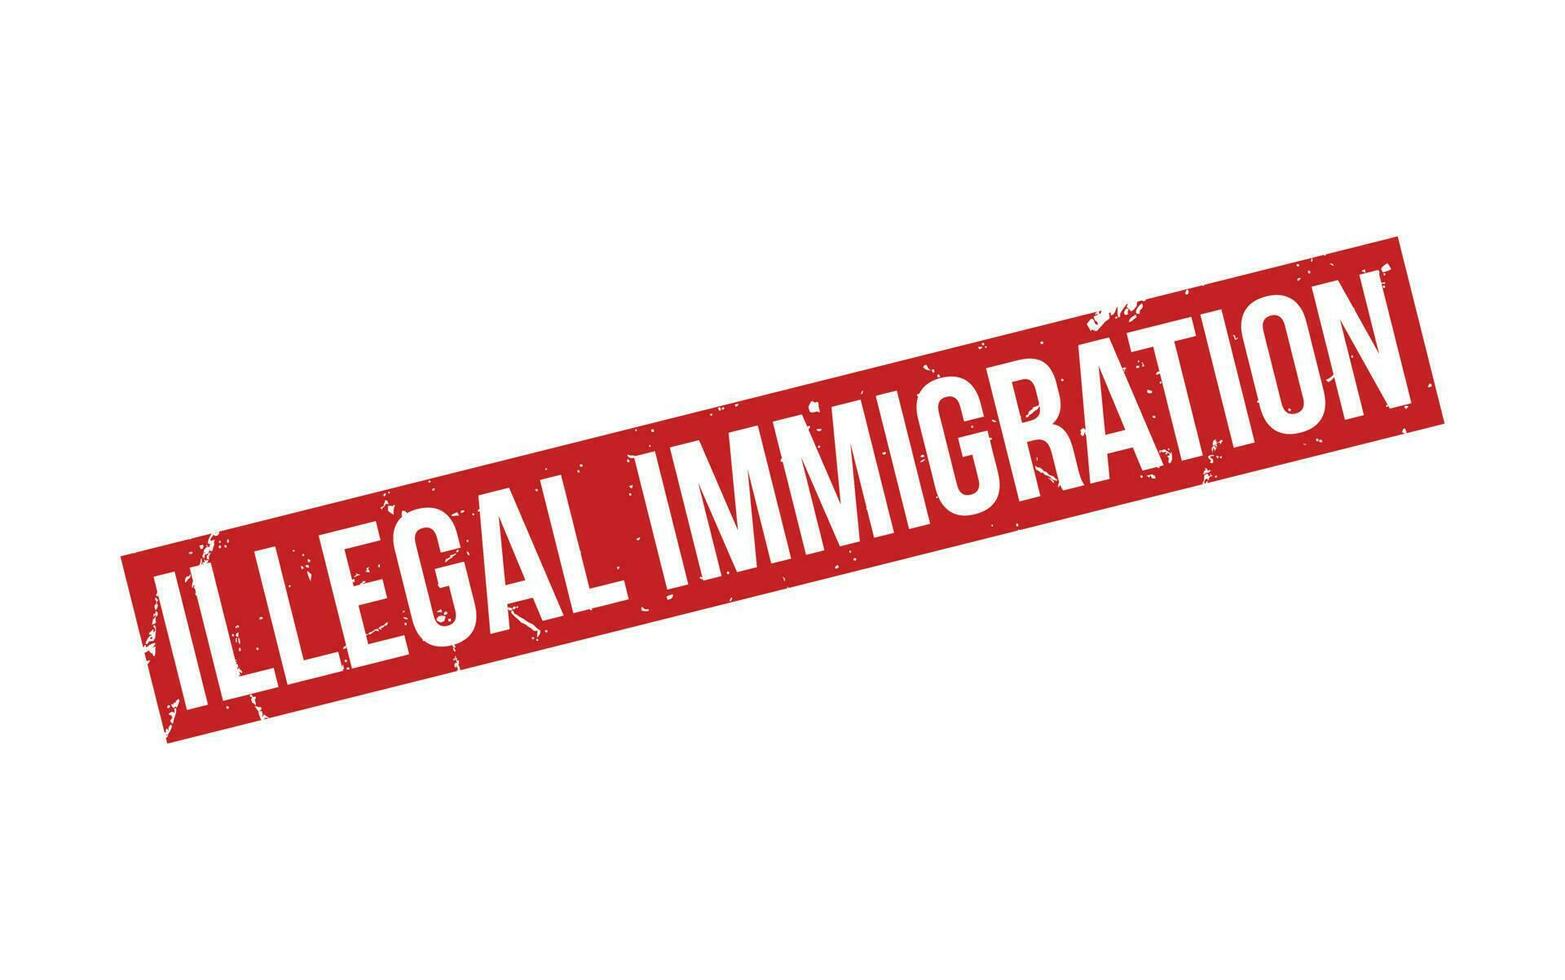 ilegal imigração borracha carimbo foca vetor